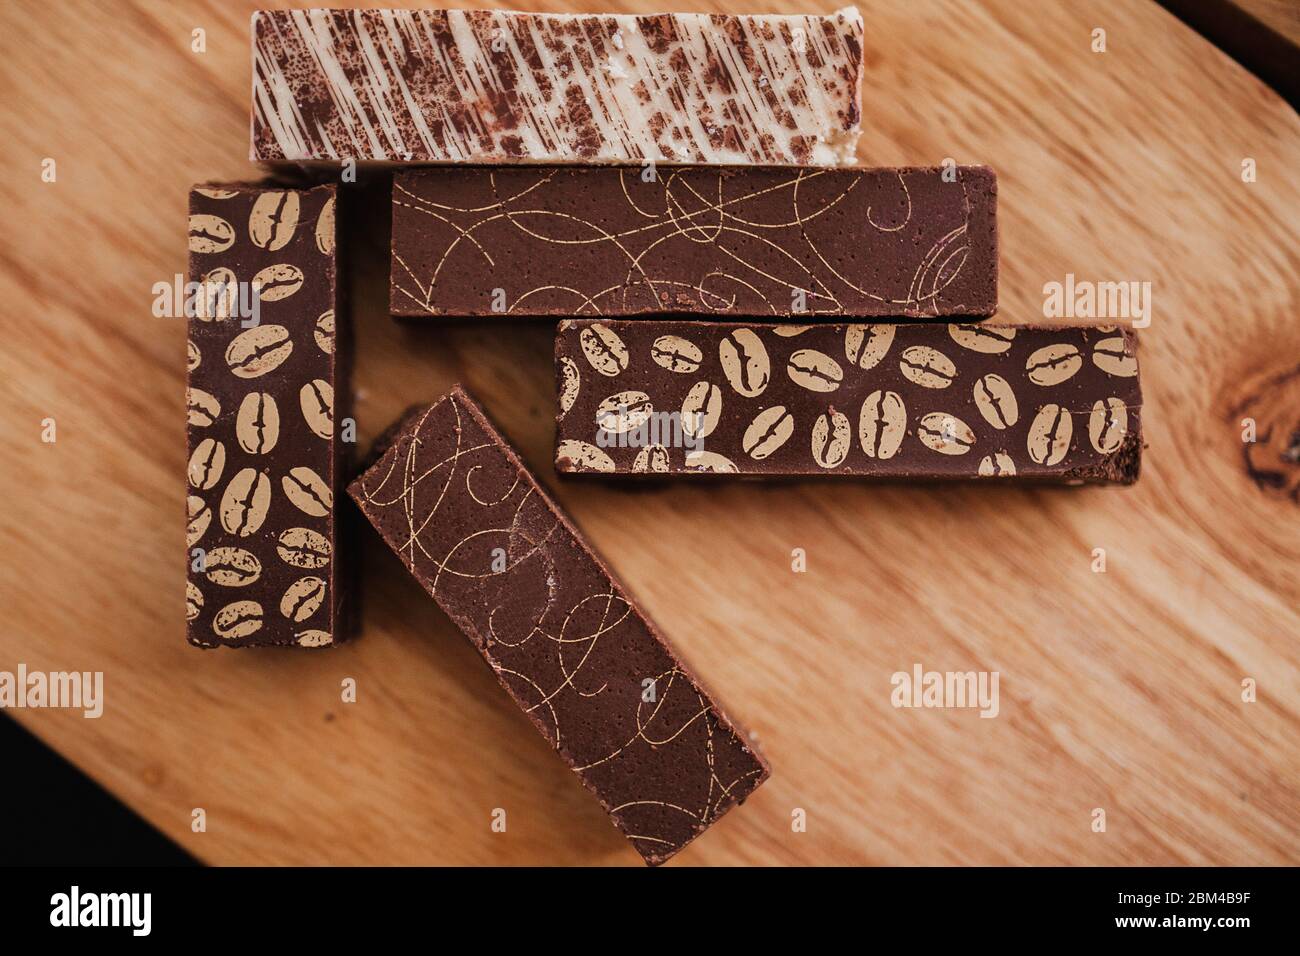 turron chocolate and coffee Stock Photo